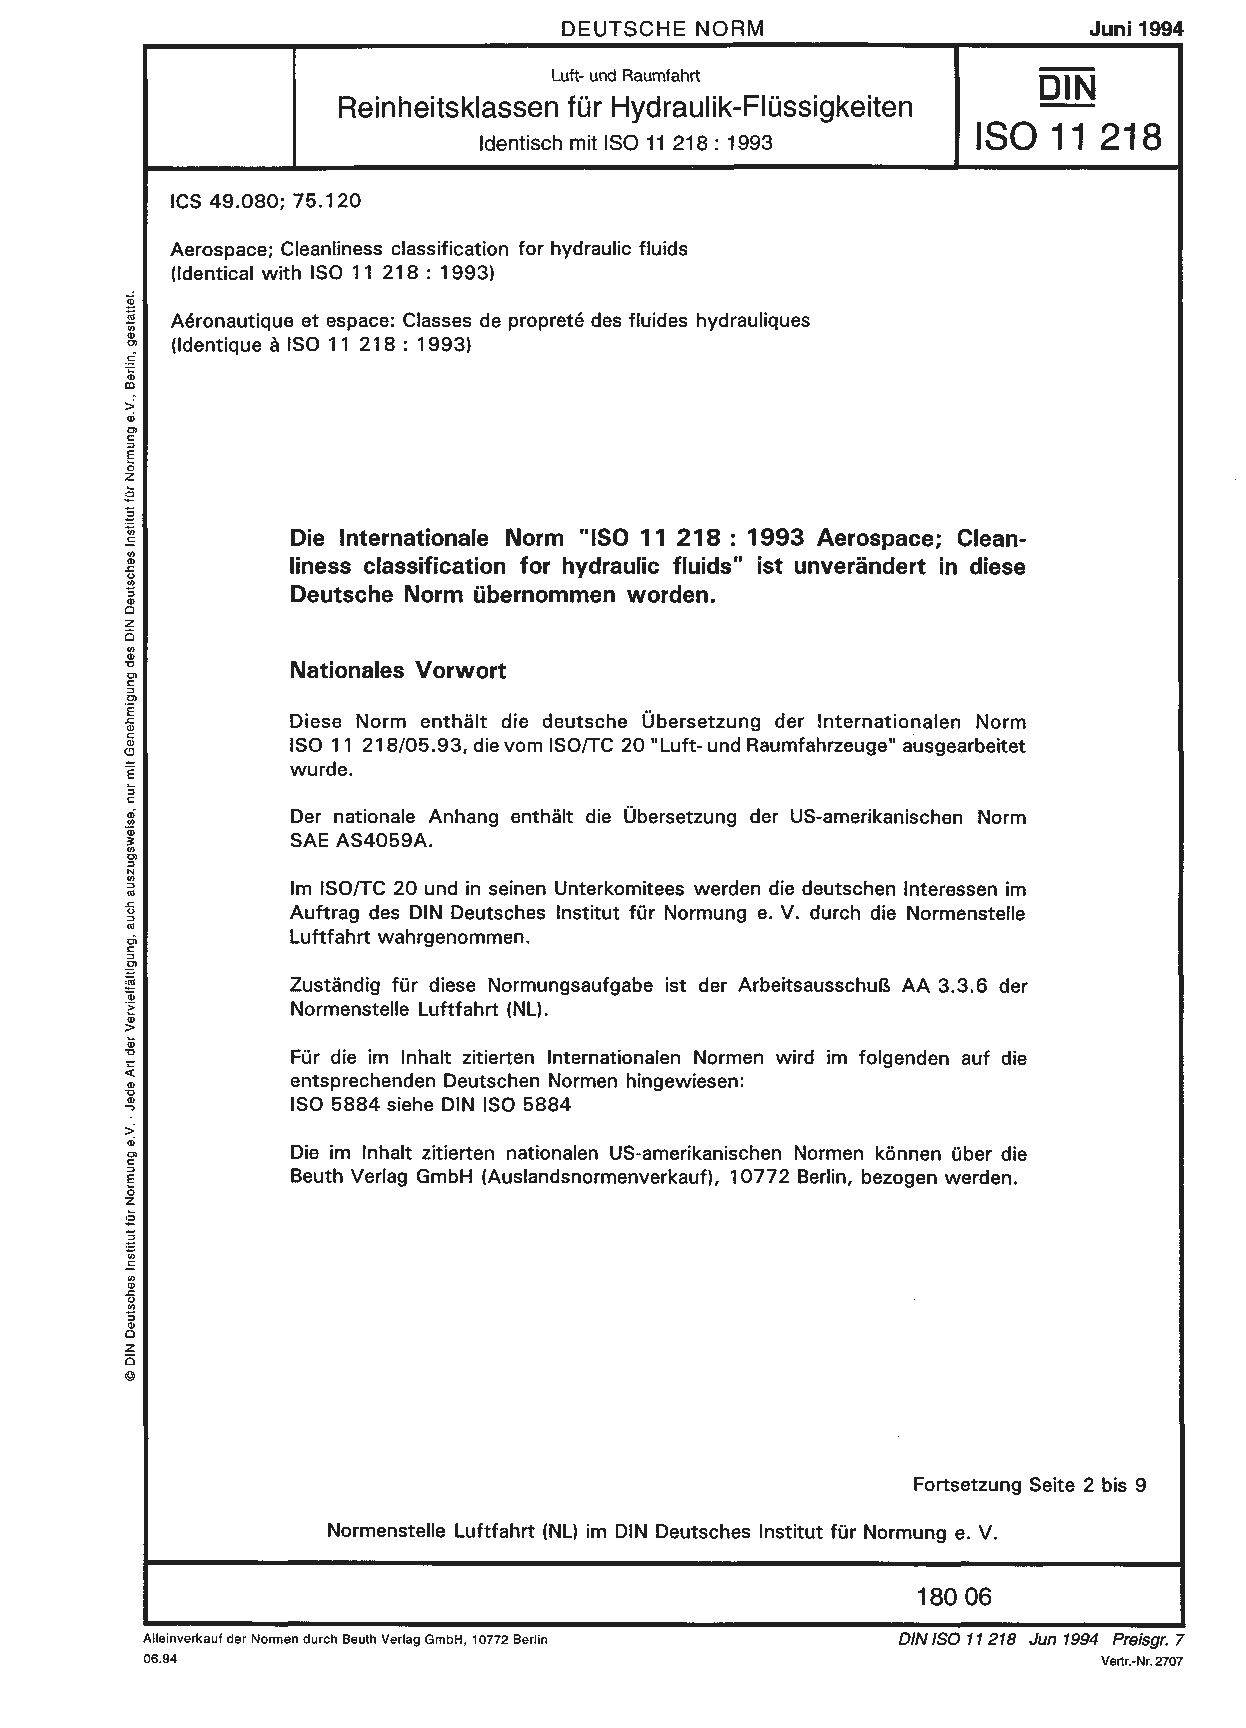 DIN ISO 11218:1994